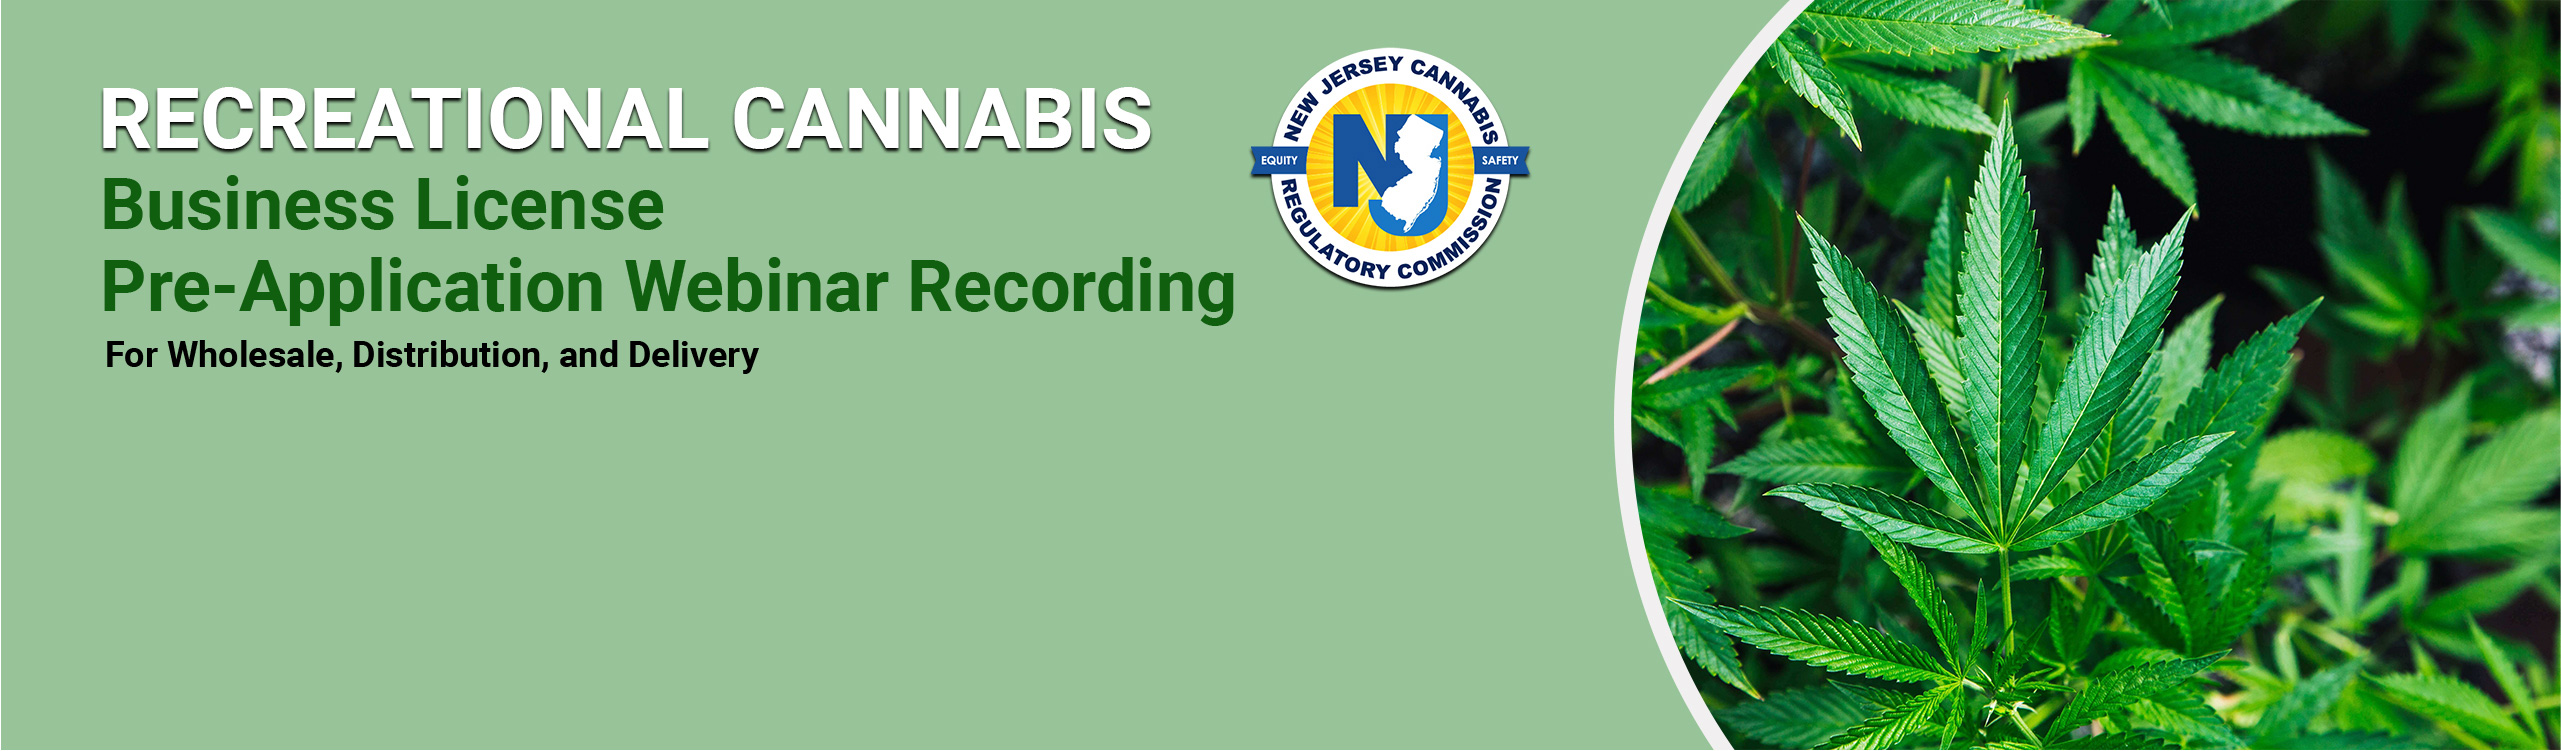 Recreational Cannabis Business License Pre-Application Webinar